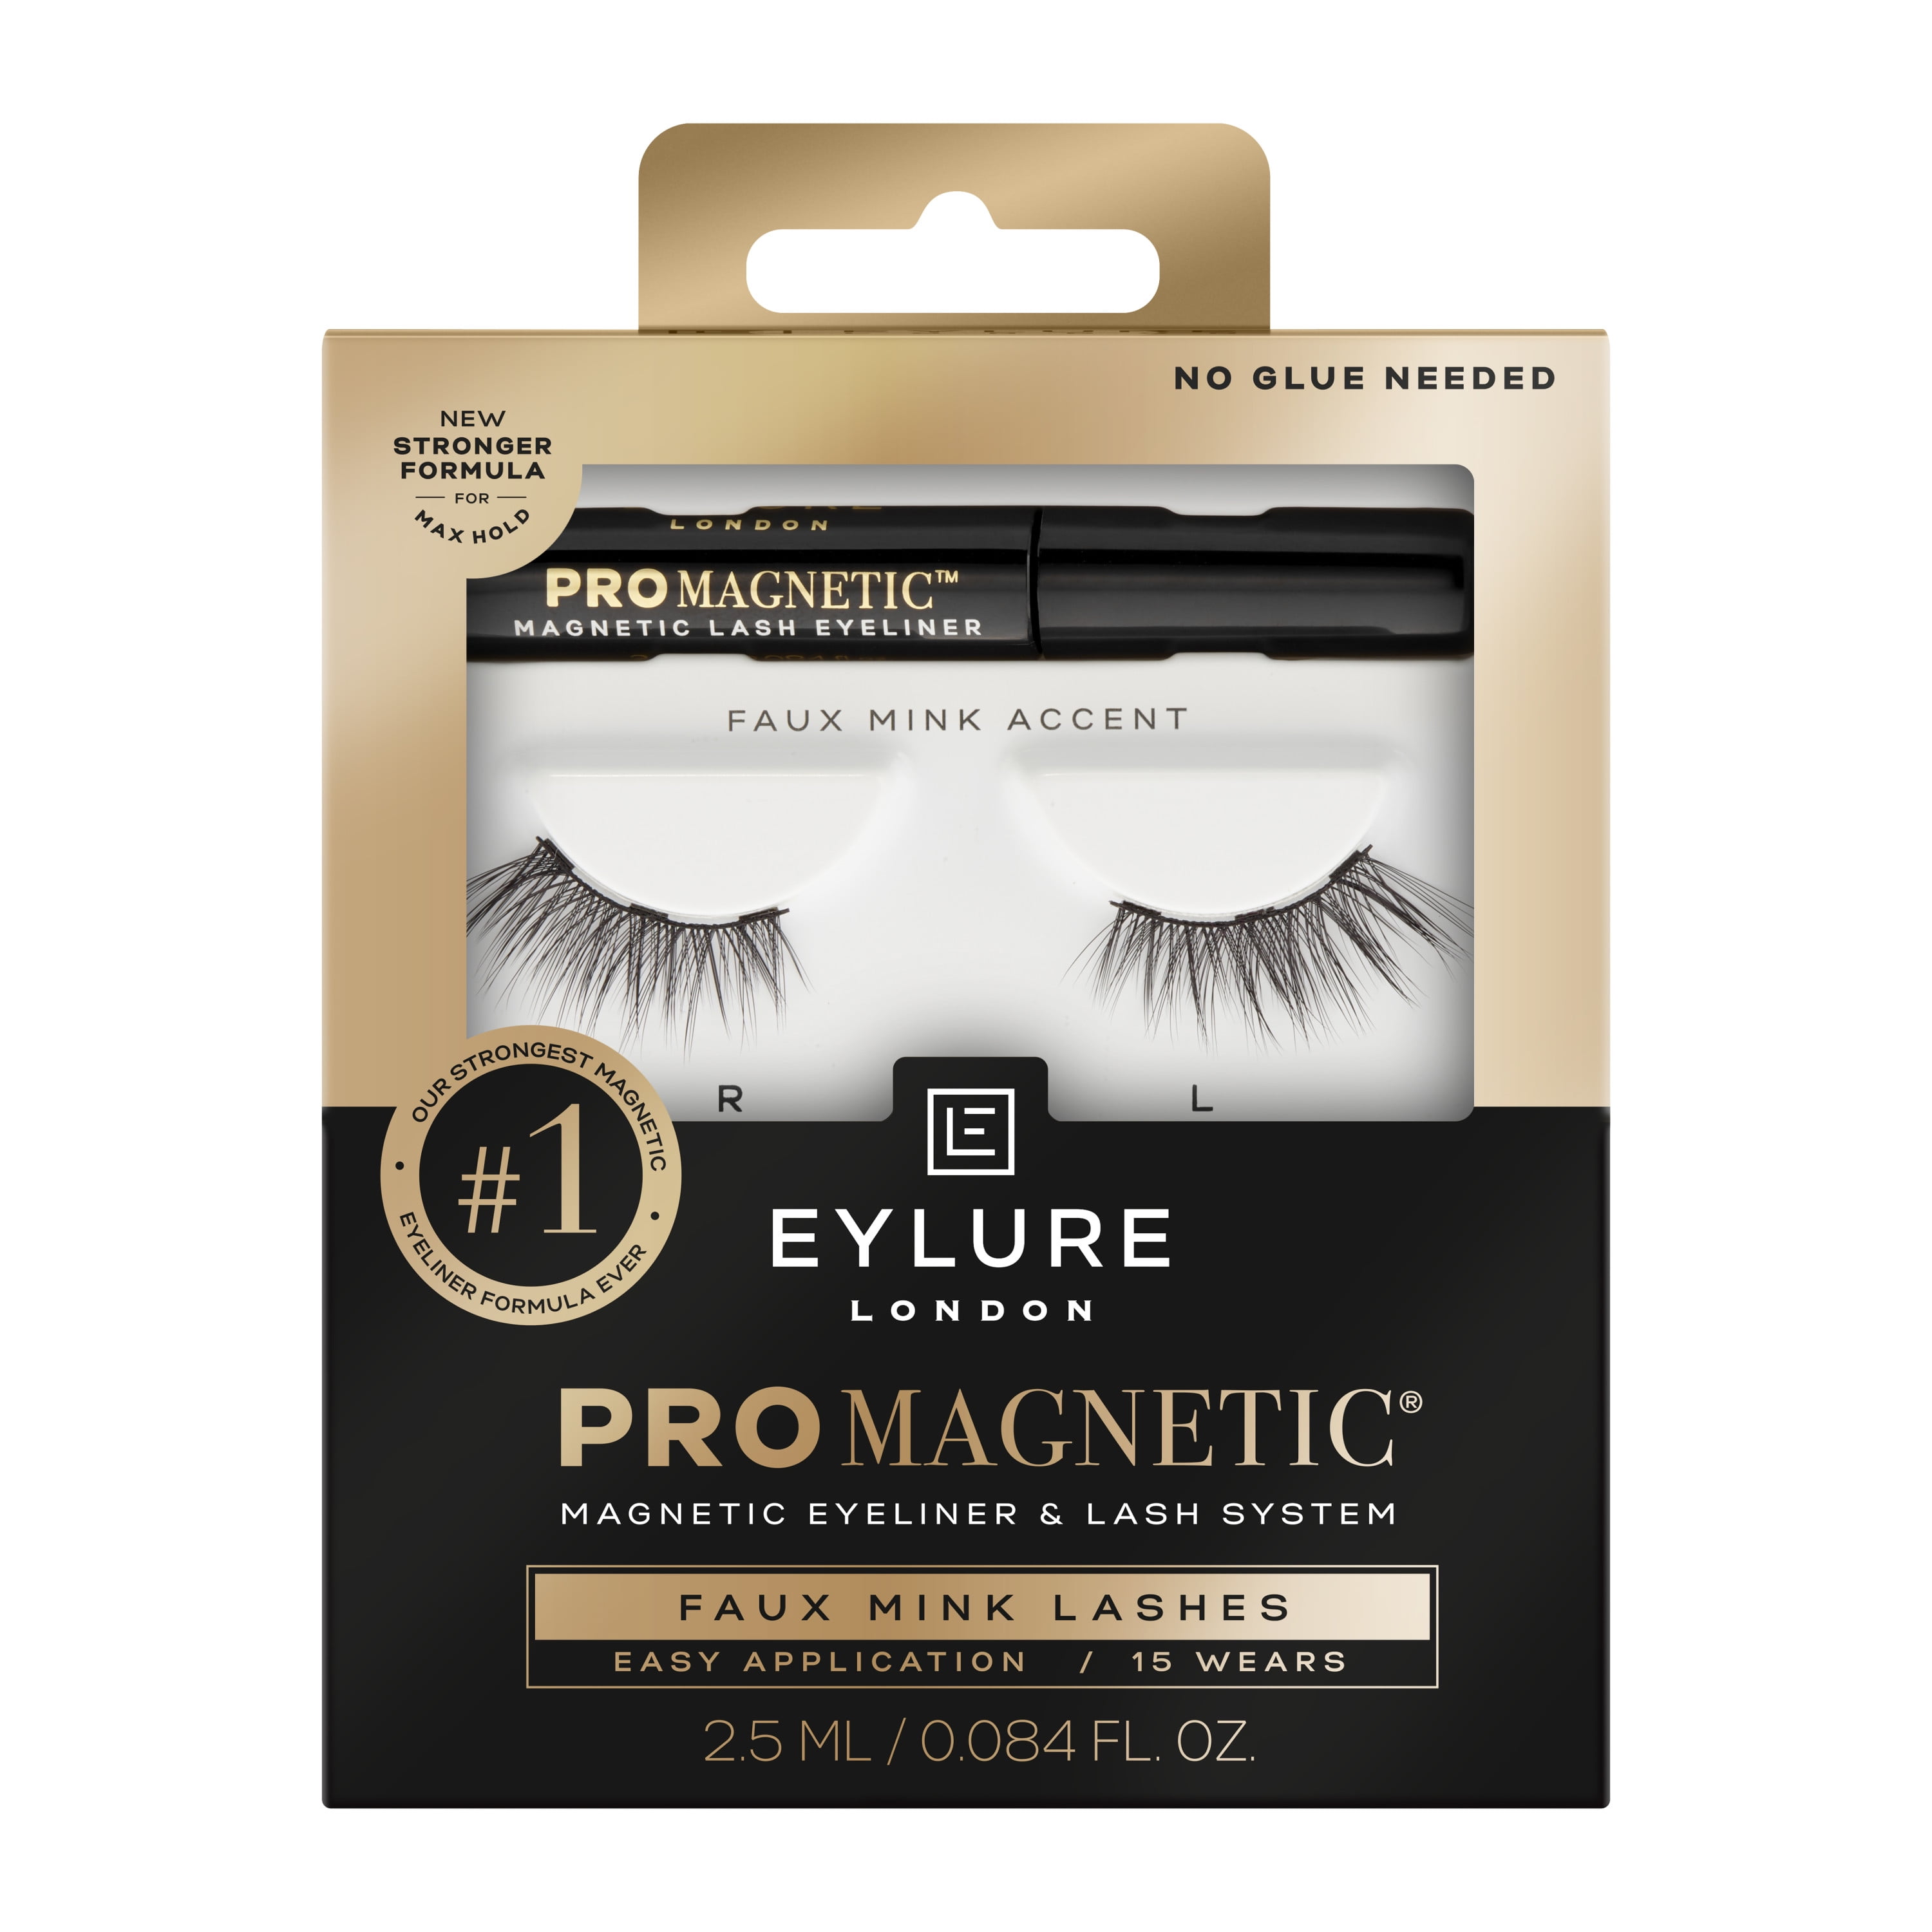 Eylure PROMAGNETIC Eyeliner & Lash Kit, Faux Mink Accent, Black